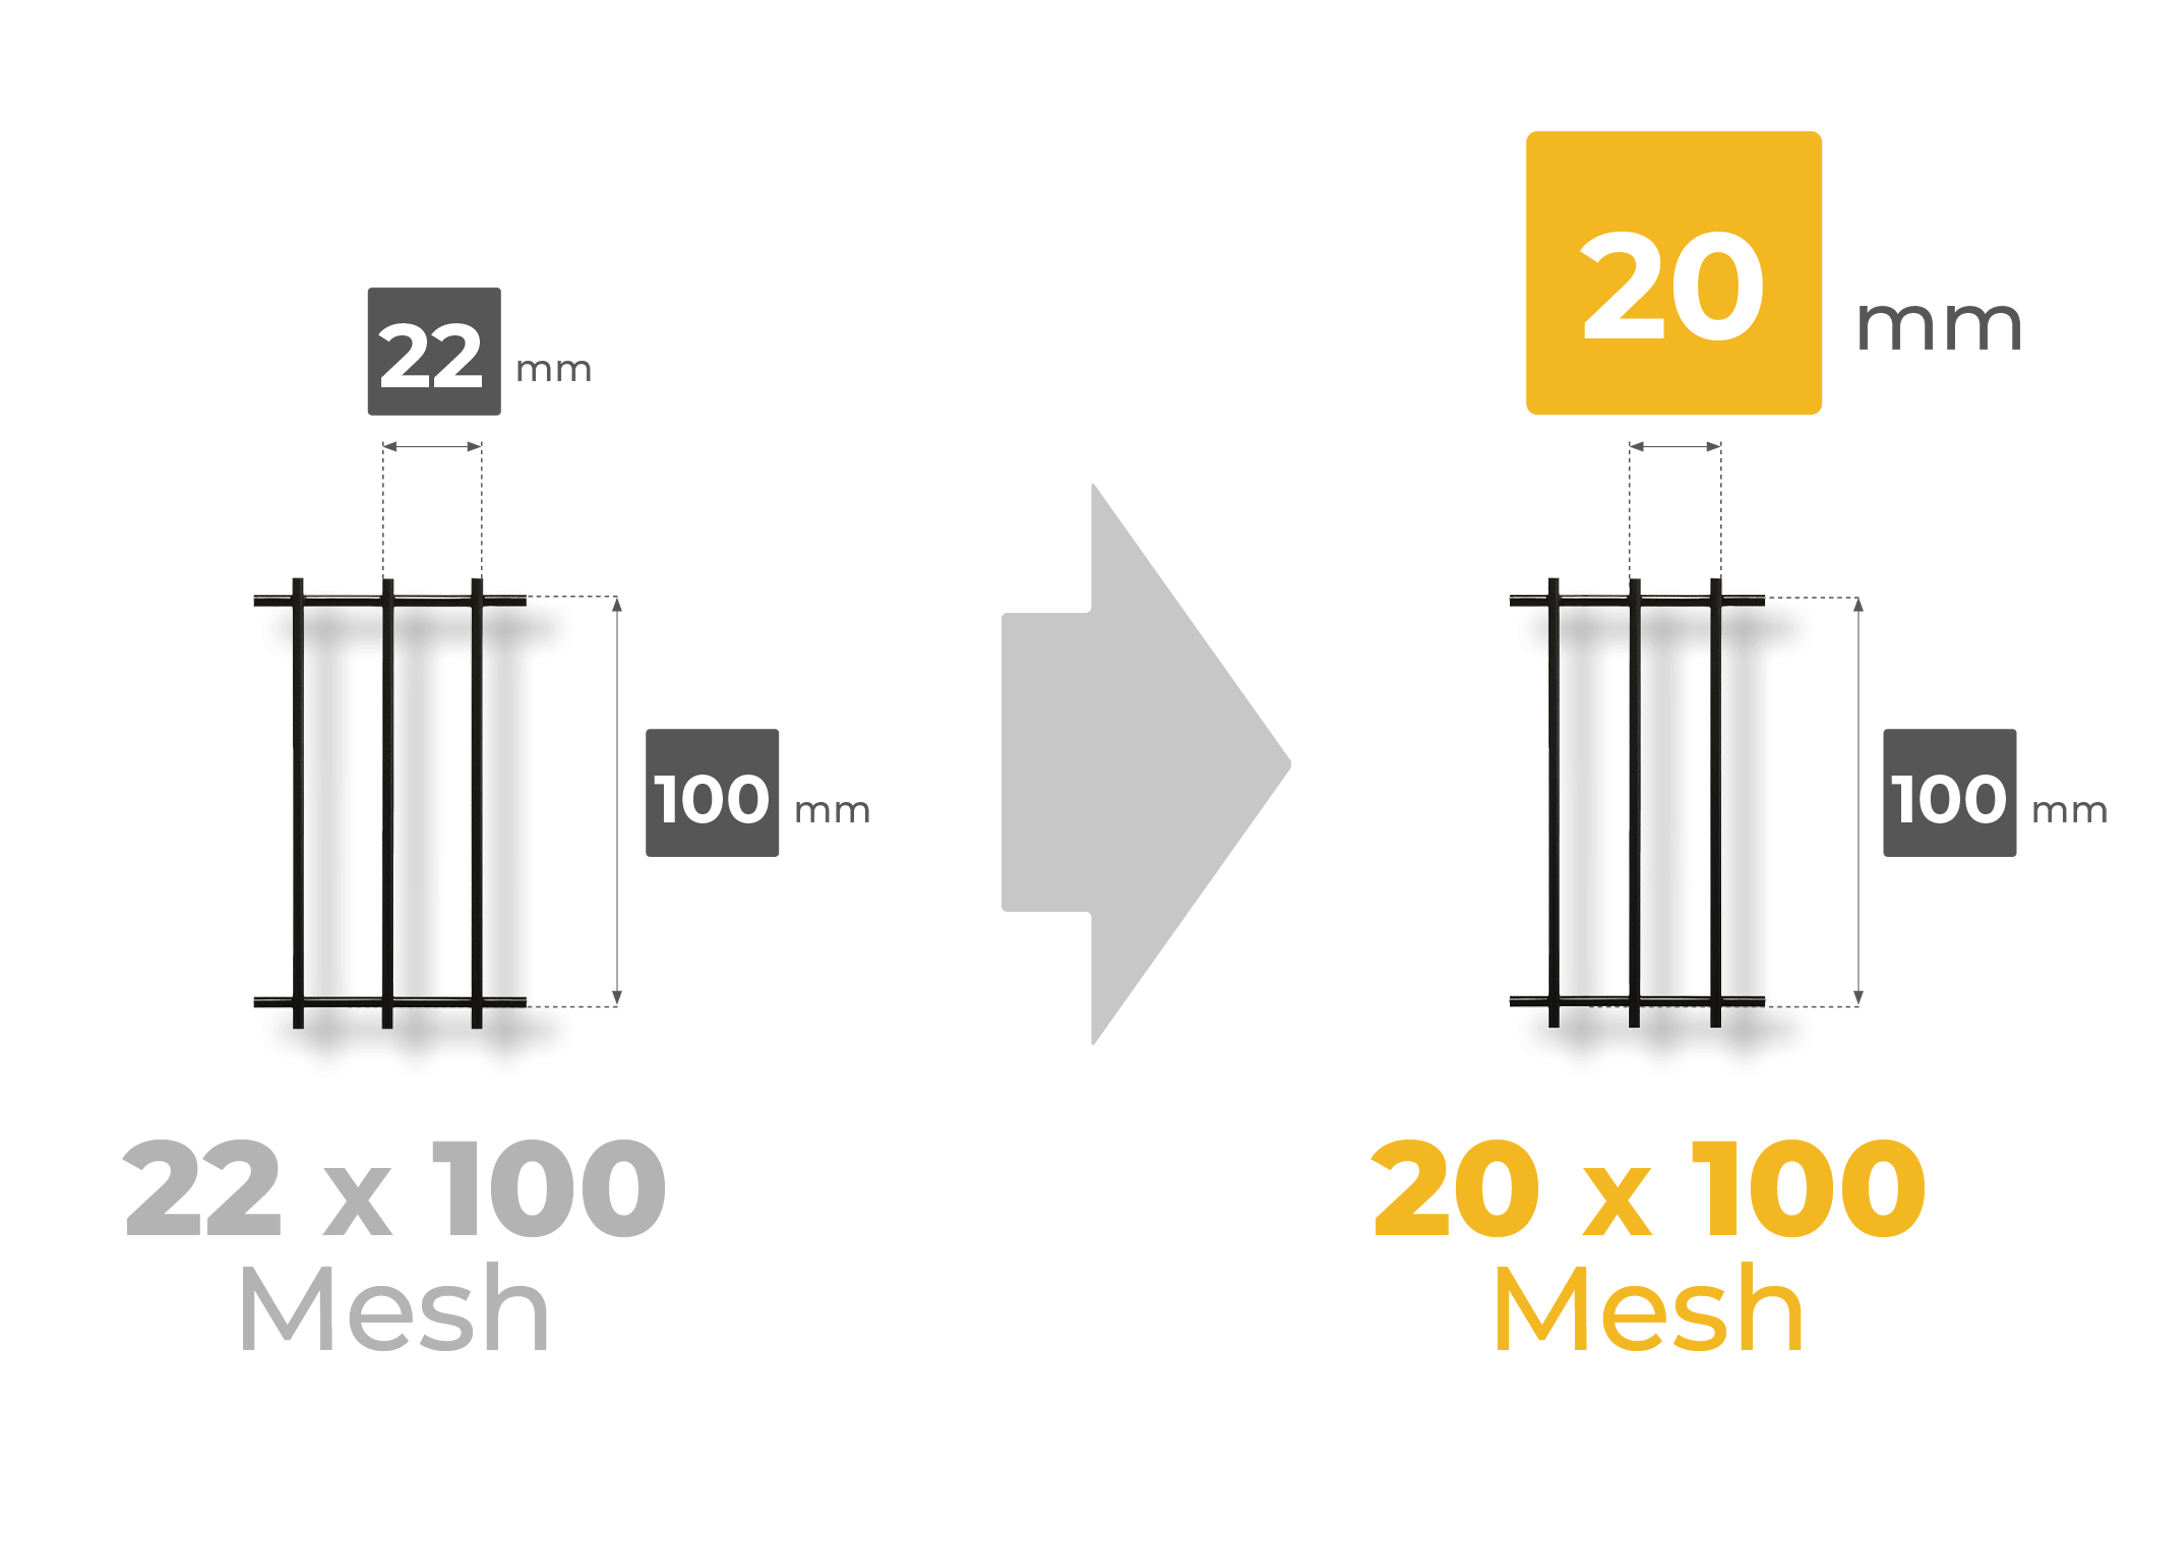 The Brand New 20x100 Mesh slot of Satech Modular Machine Guards